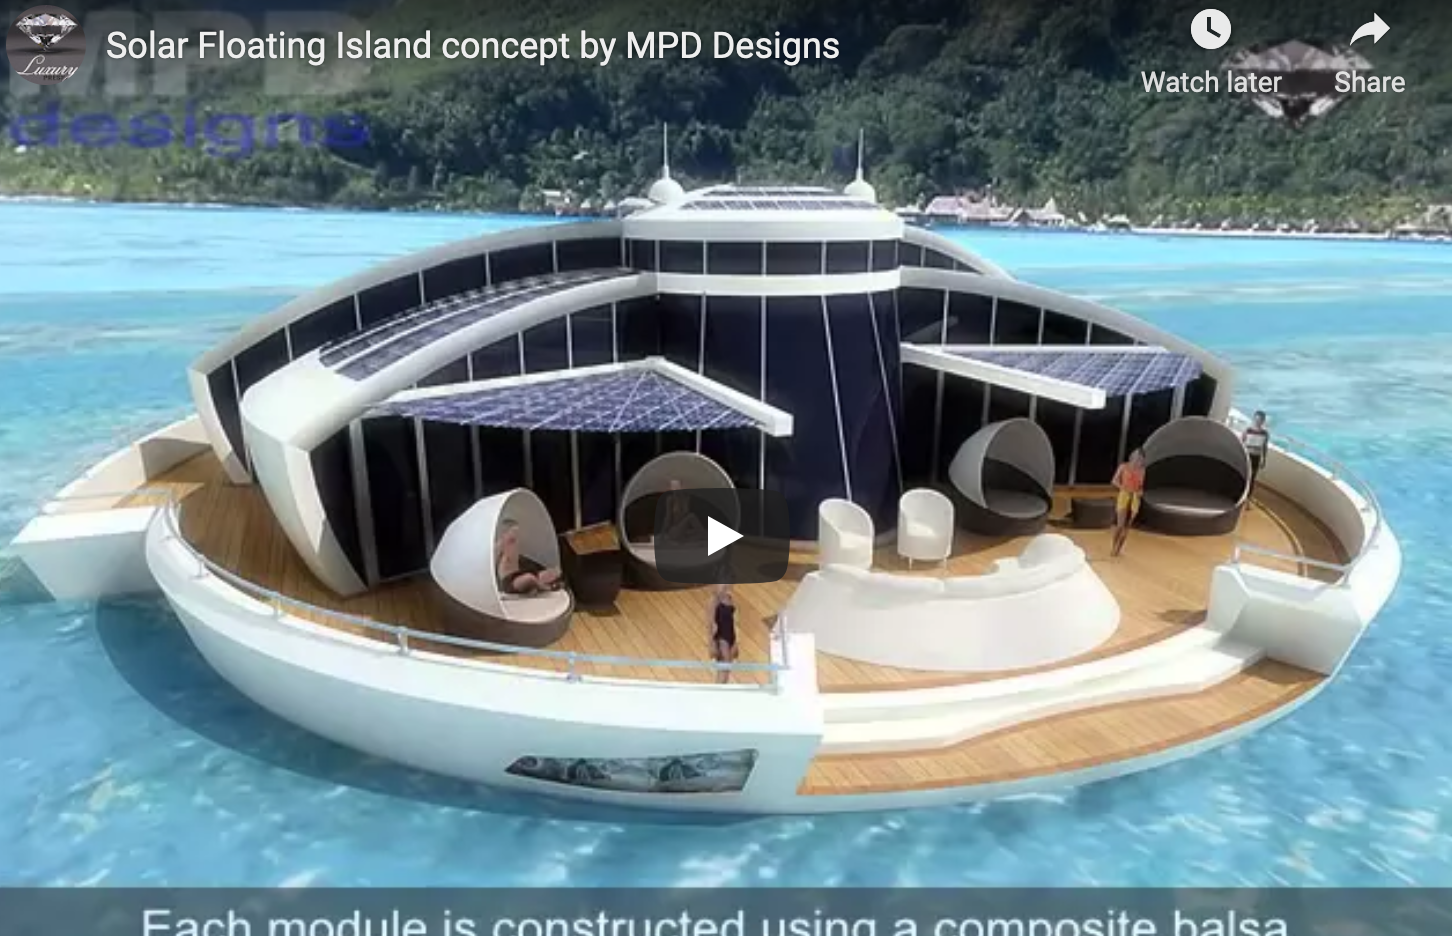 The Solar Floating Resort